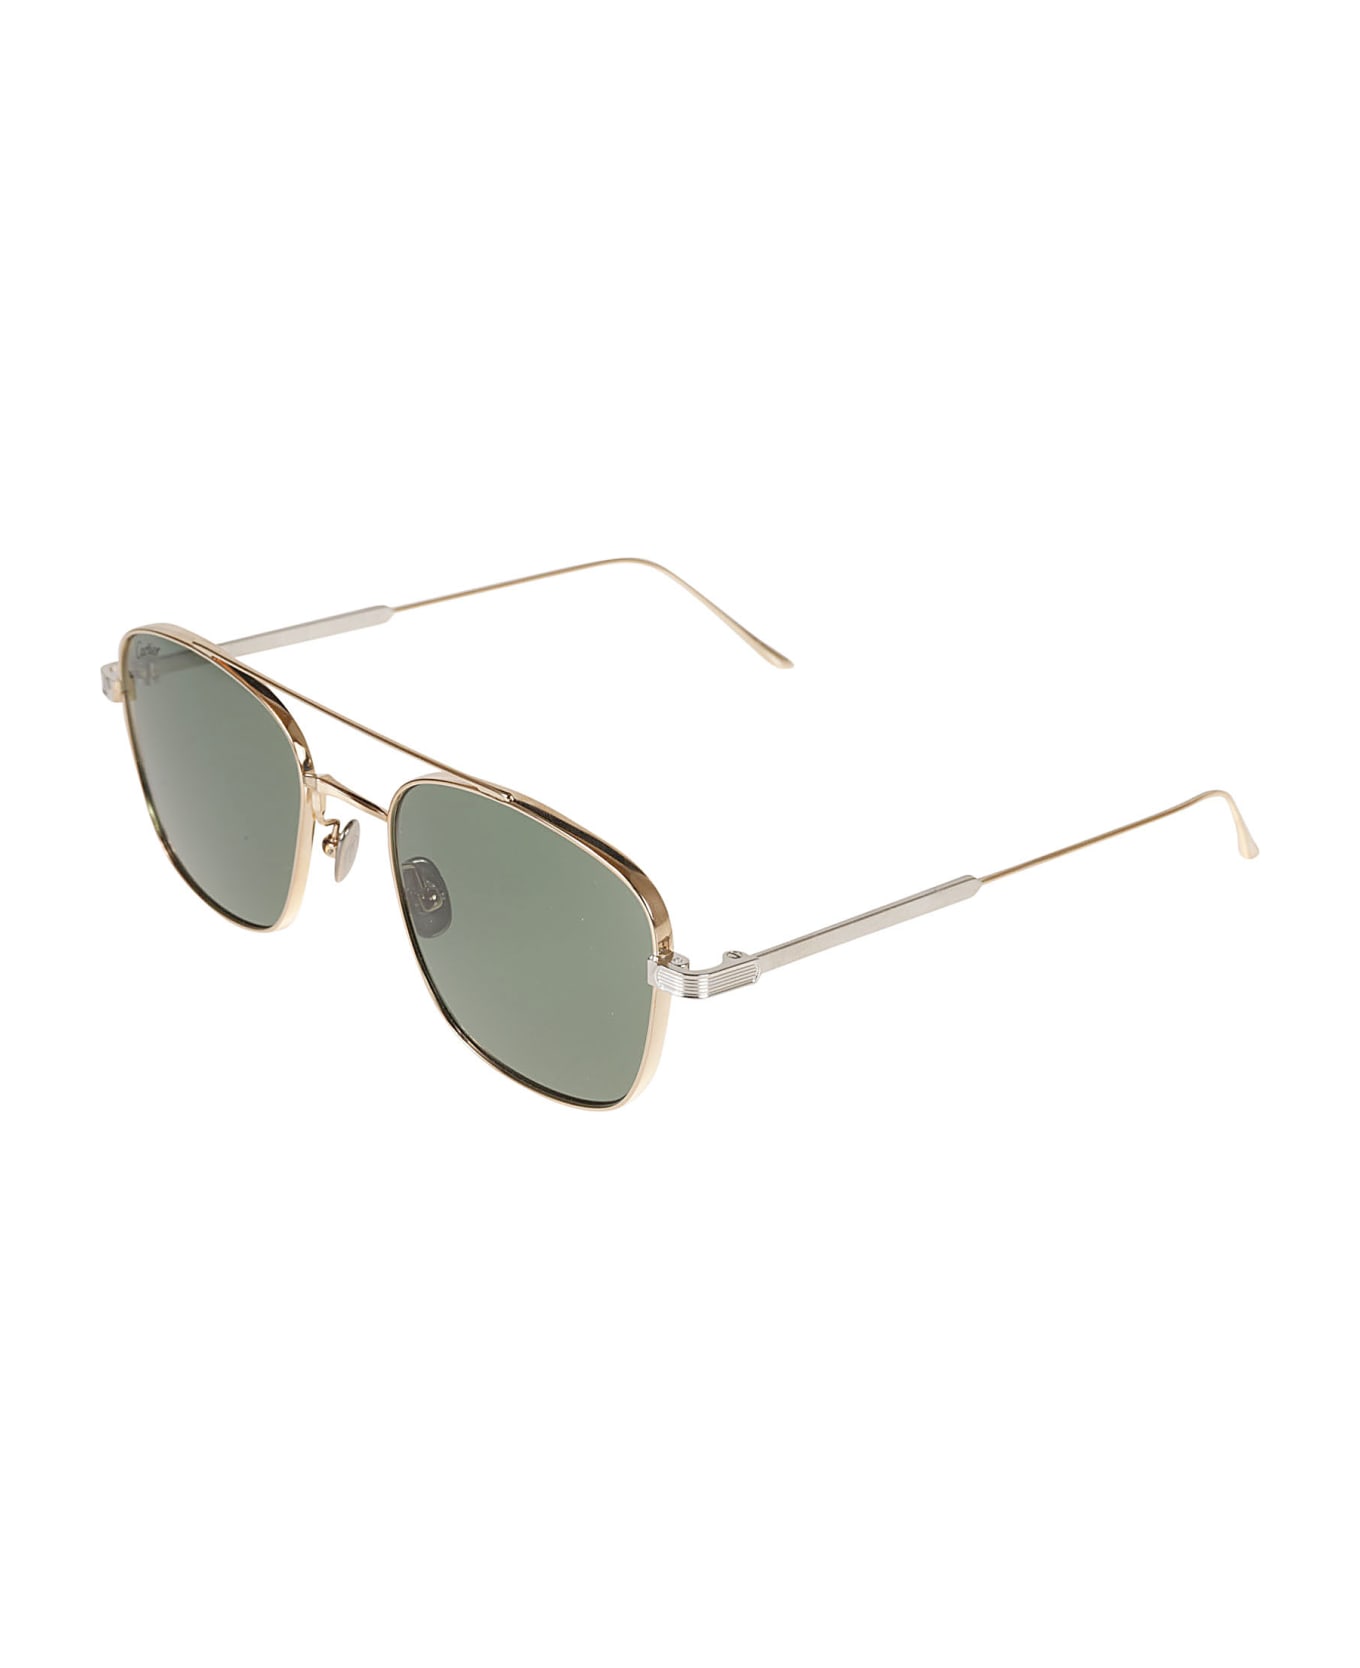 Cartier Eyewear Aviator Square Sunglasses - Silver/Green サングラス